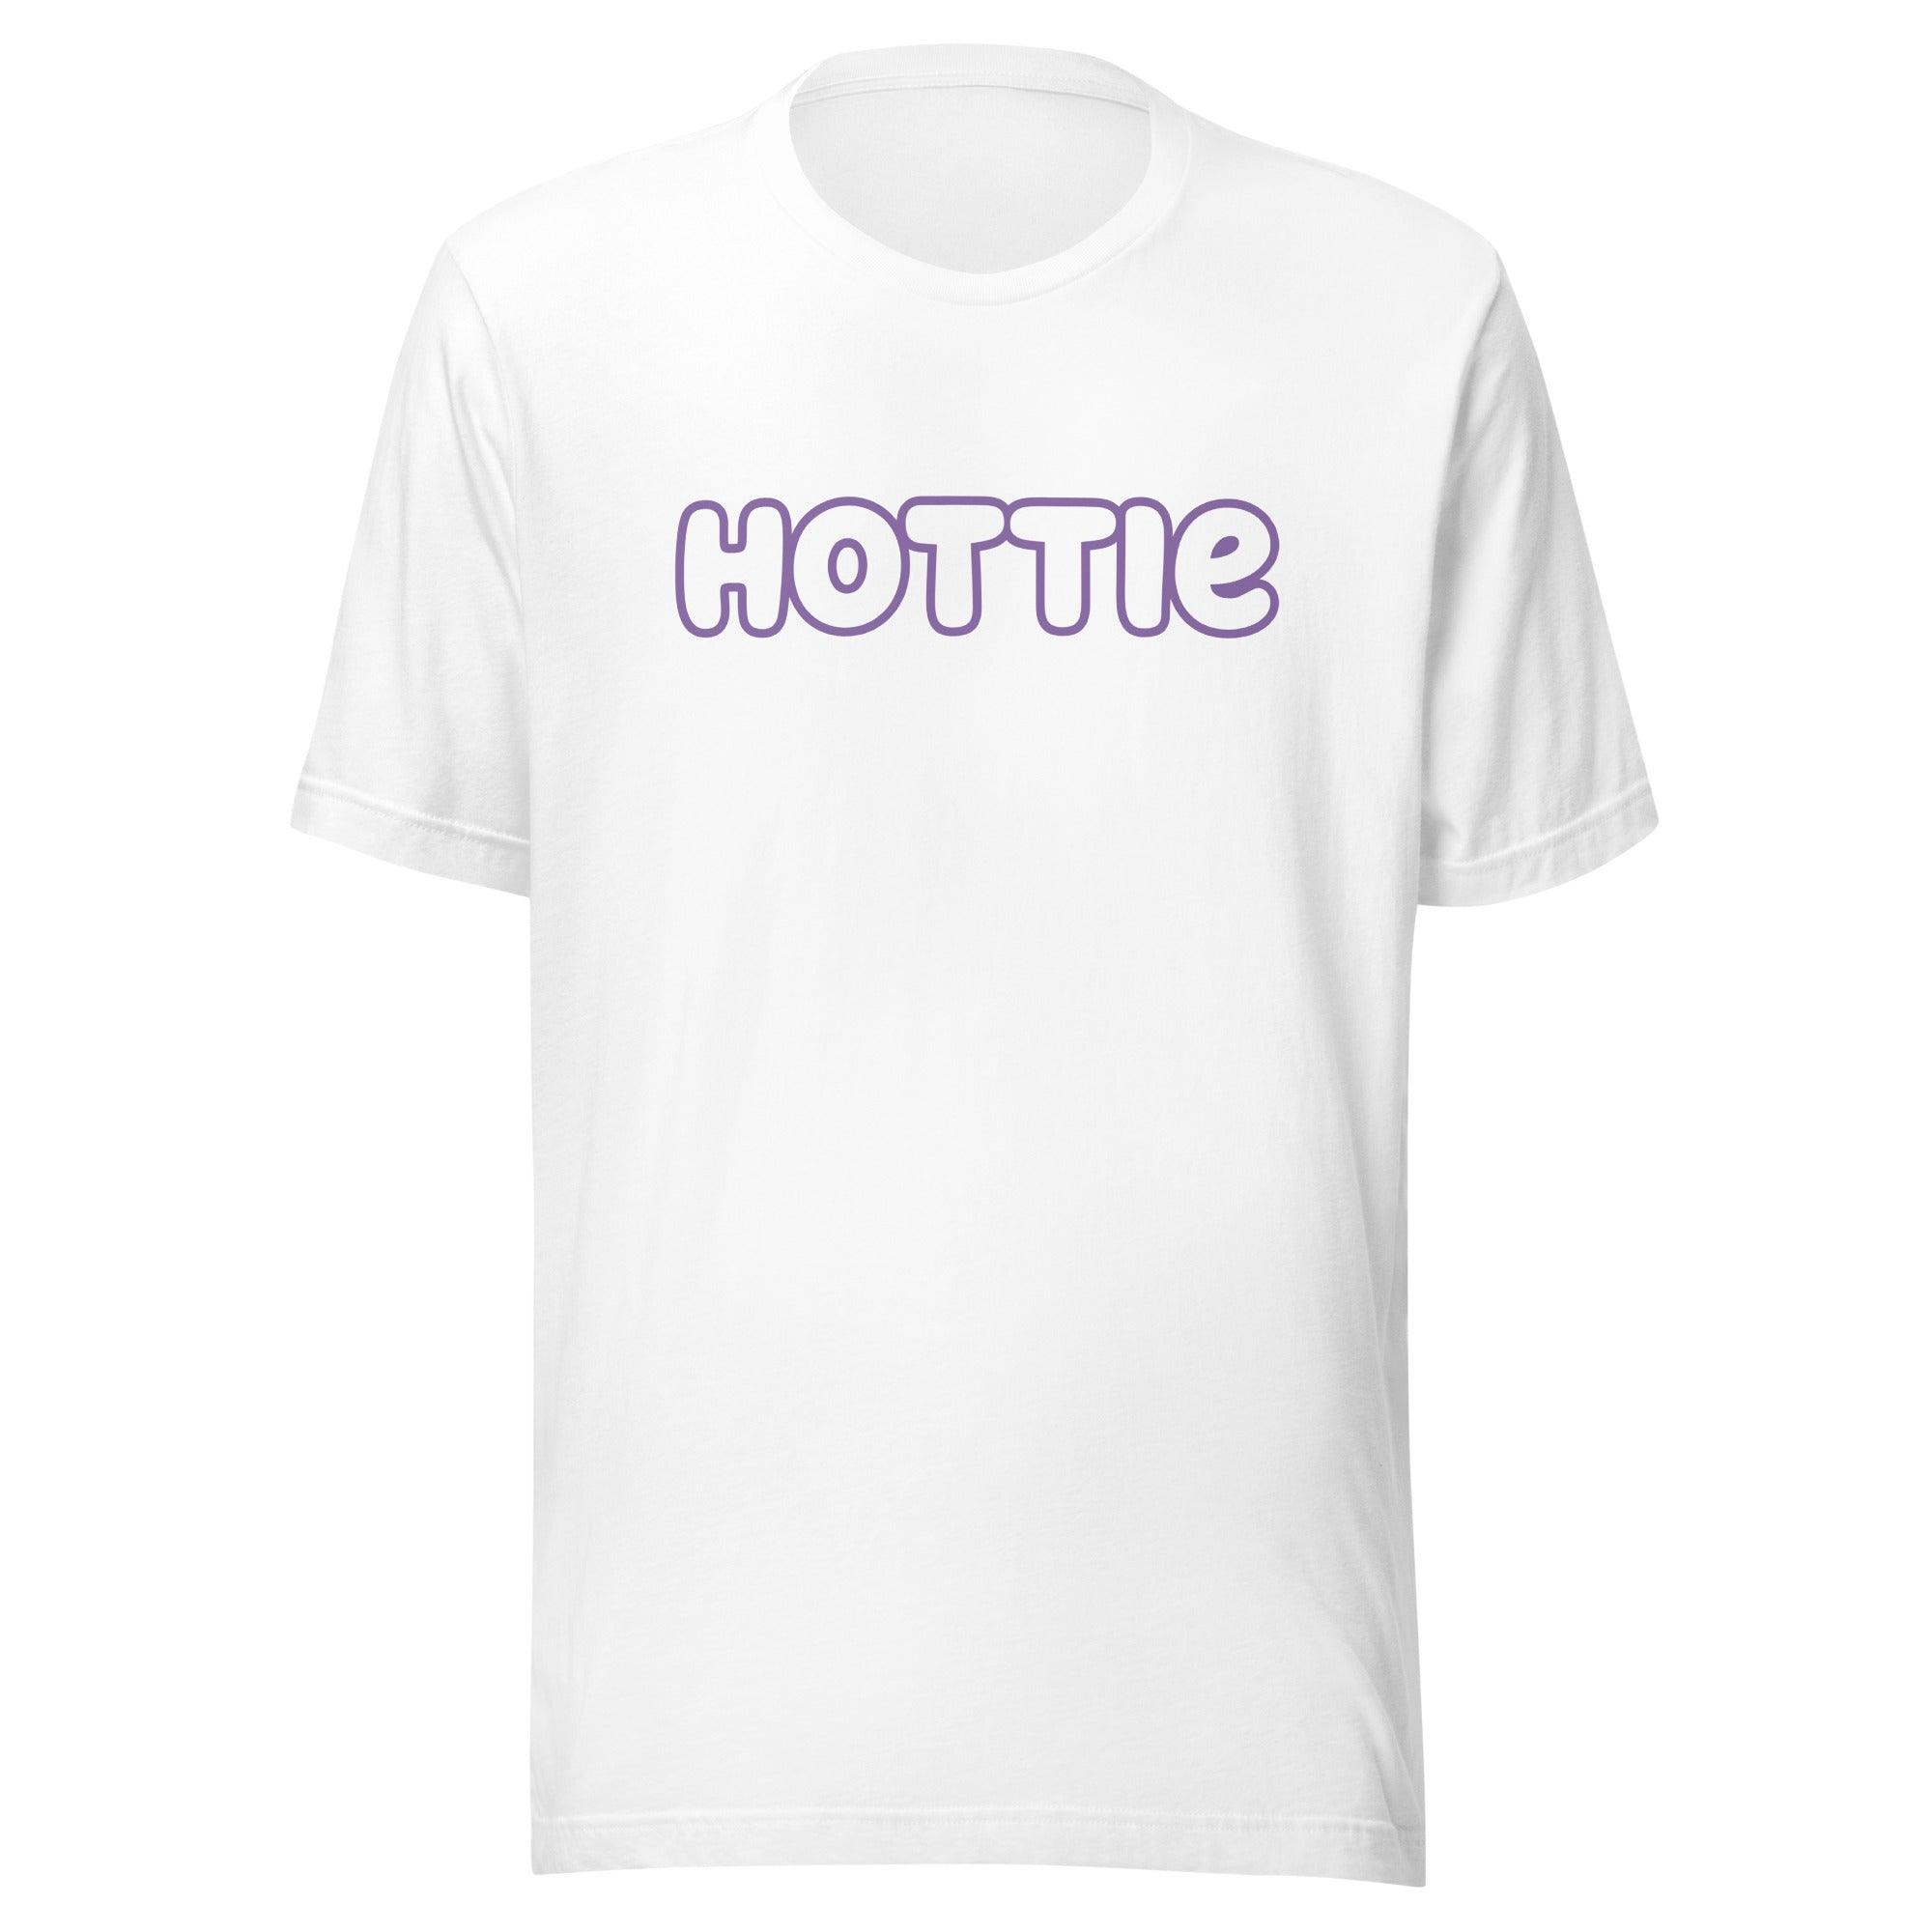 Summer T-shirt Hottie Short Sleeve Unisex Top - TopKoalaTee